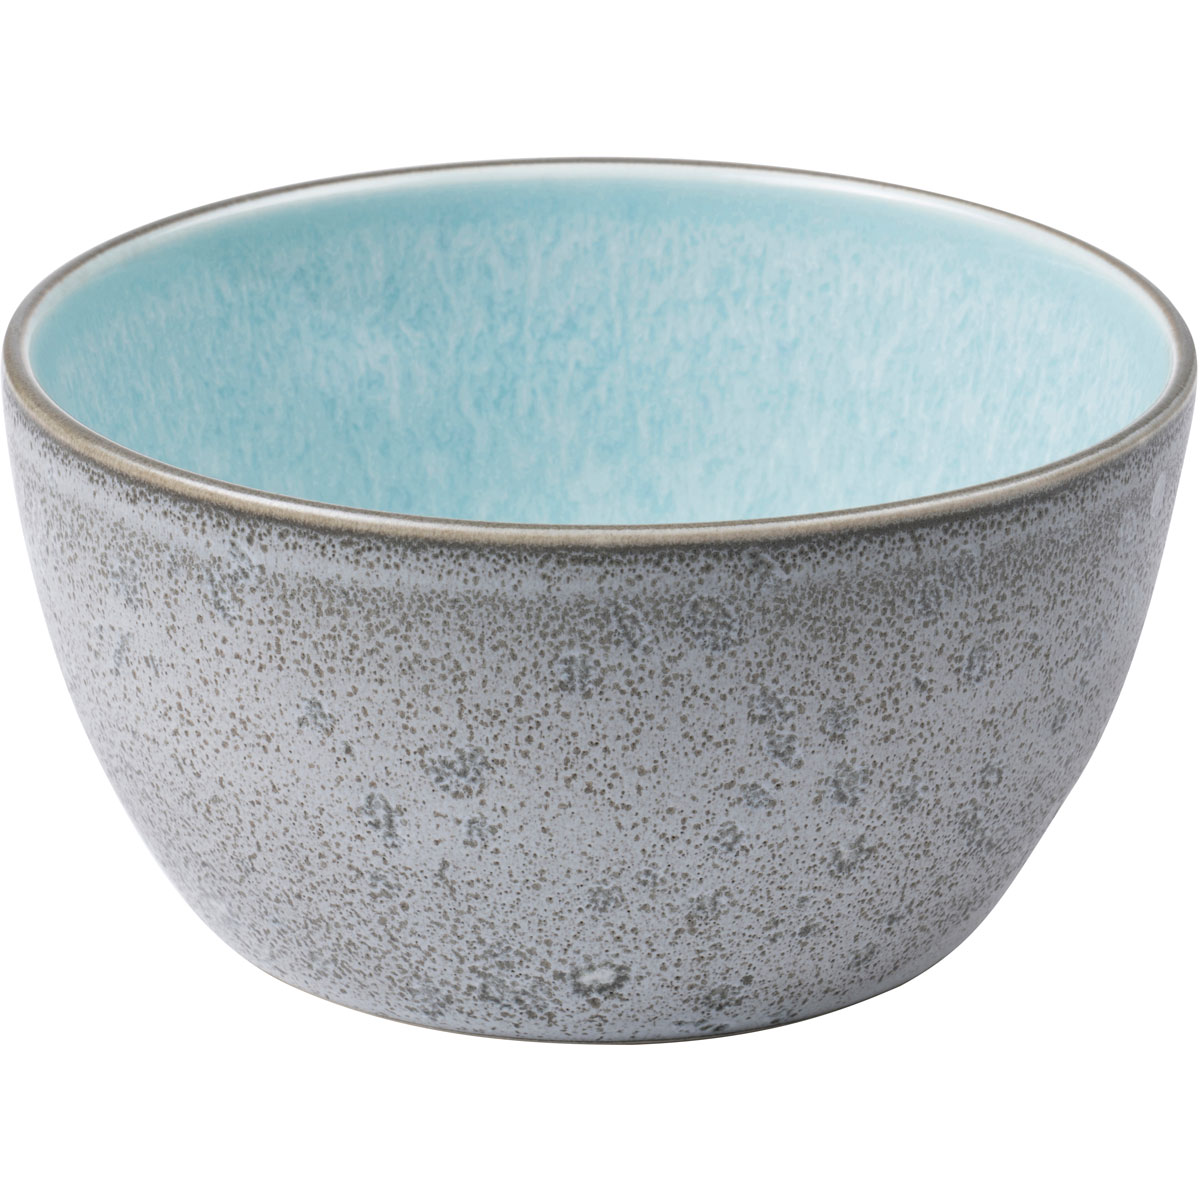 Bitz Bowl 14 cm, Grey/Light Blue